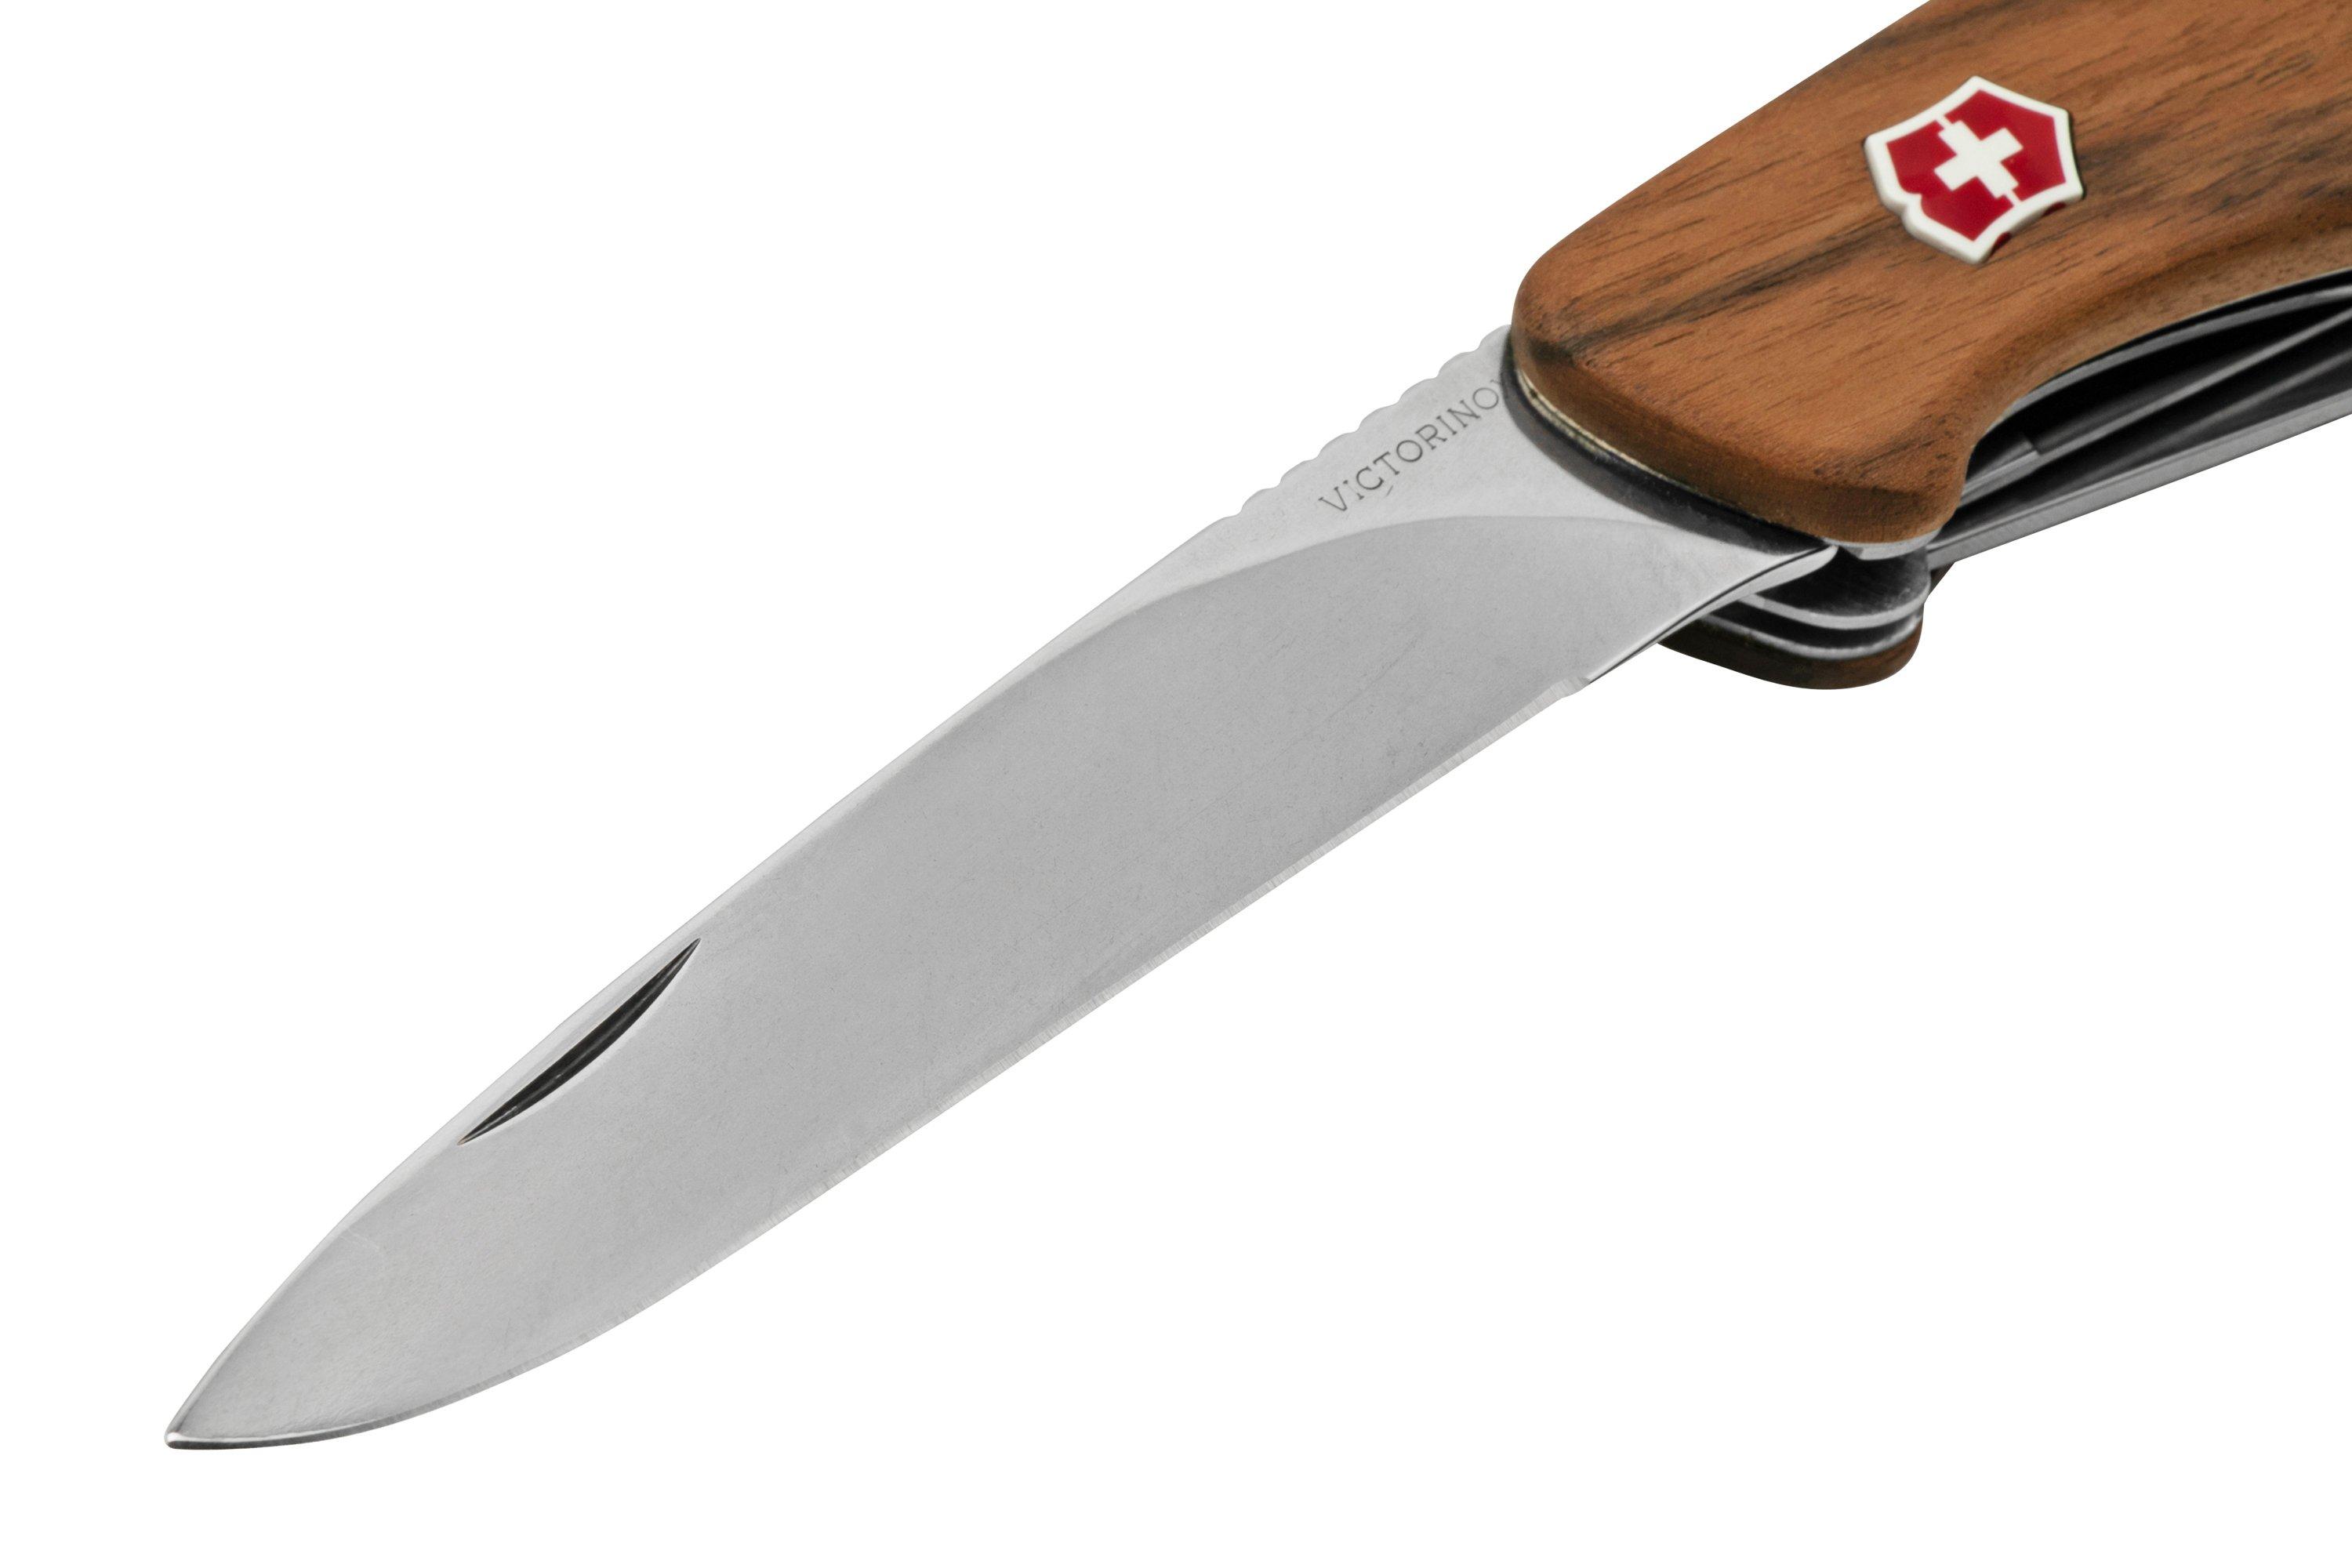 Victorinox Ranger Wood 55 Lockblade Swiss Army Knife at Swiss Knife Shop